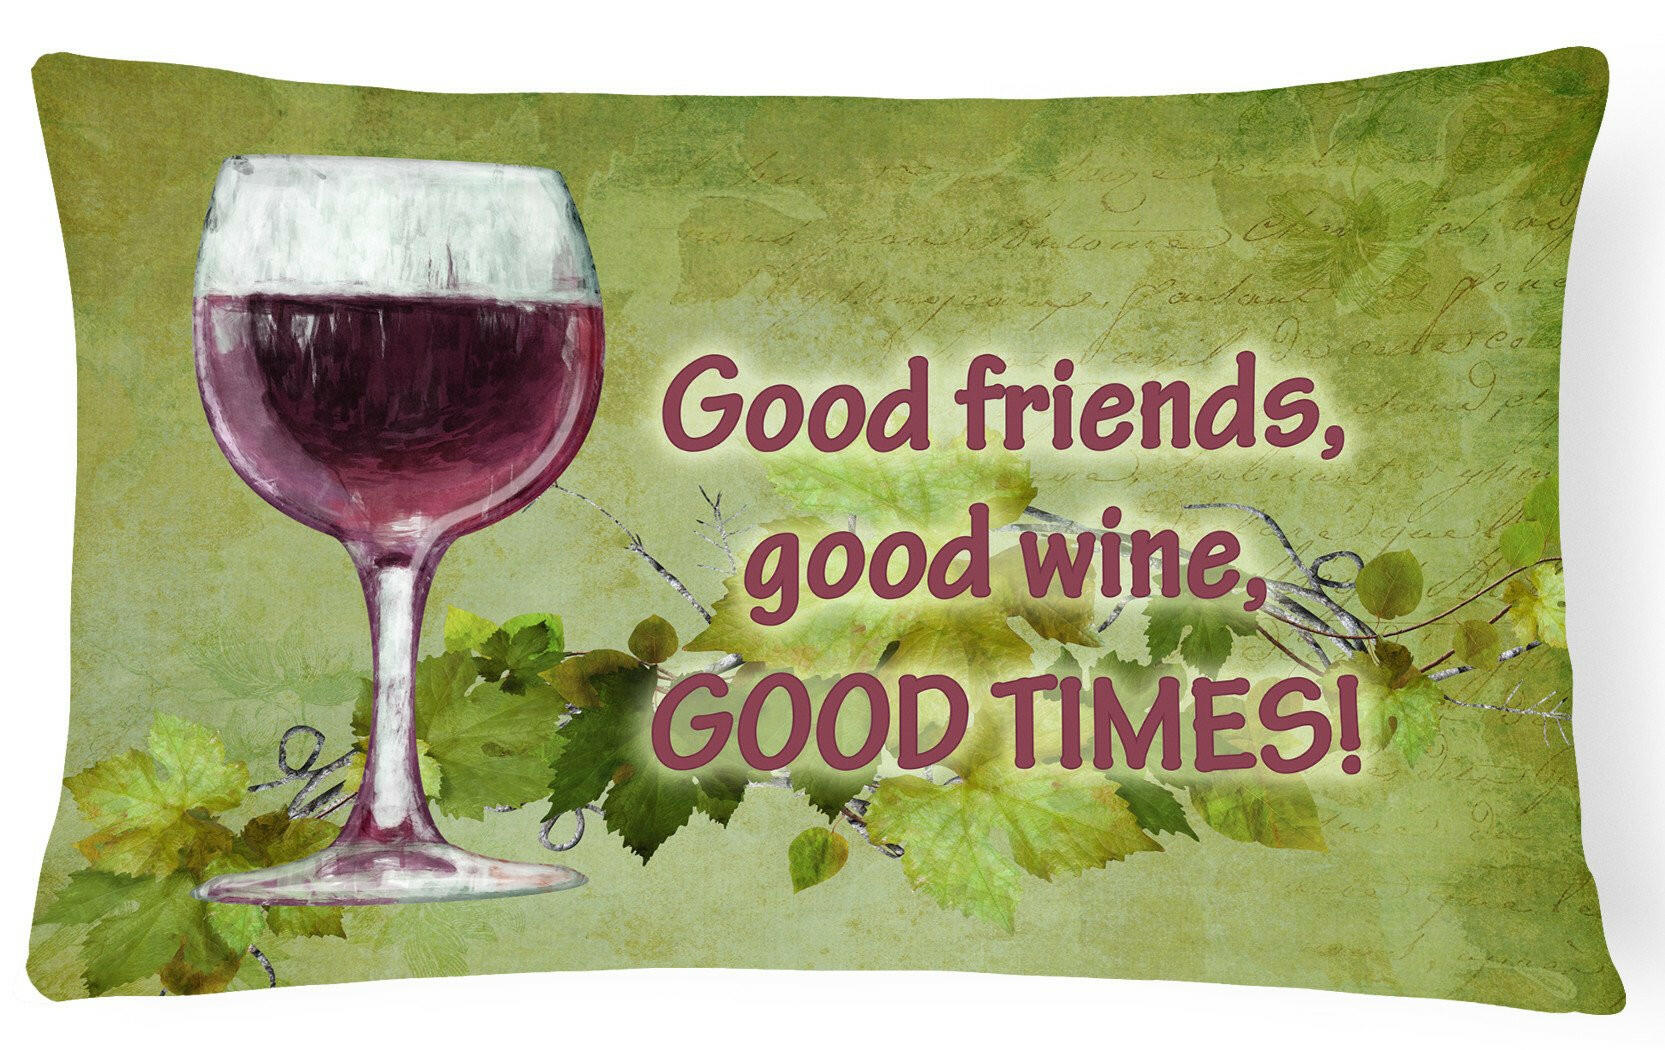 Good friends, good wine, good times   Canvas Fabric Decorative Pillow SB3070PW1216 by Caroline's Treasures